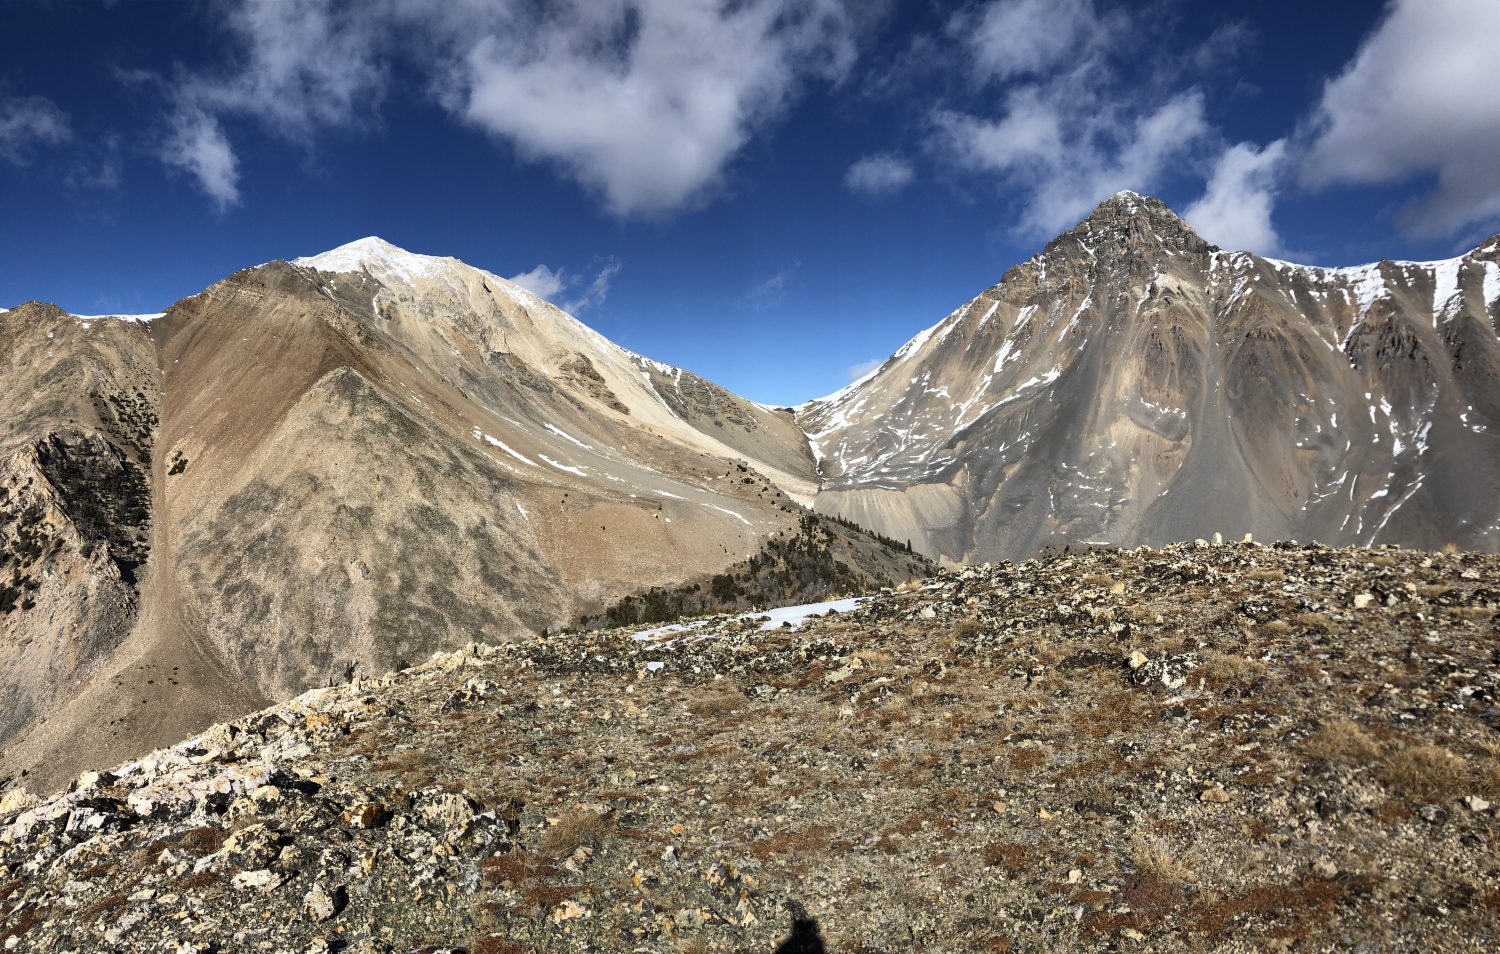 Looking to White Cap Peak, Leatherman Pass and Leatherman Peak from the summit of Peak 10195. Derek Percoski Photo 